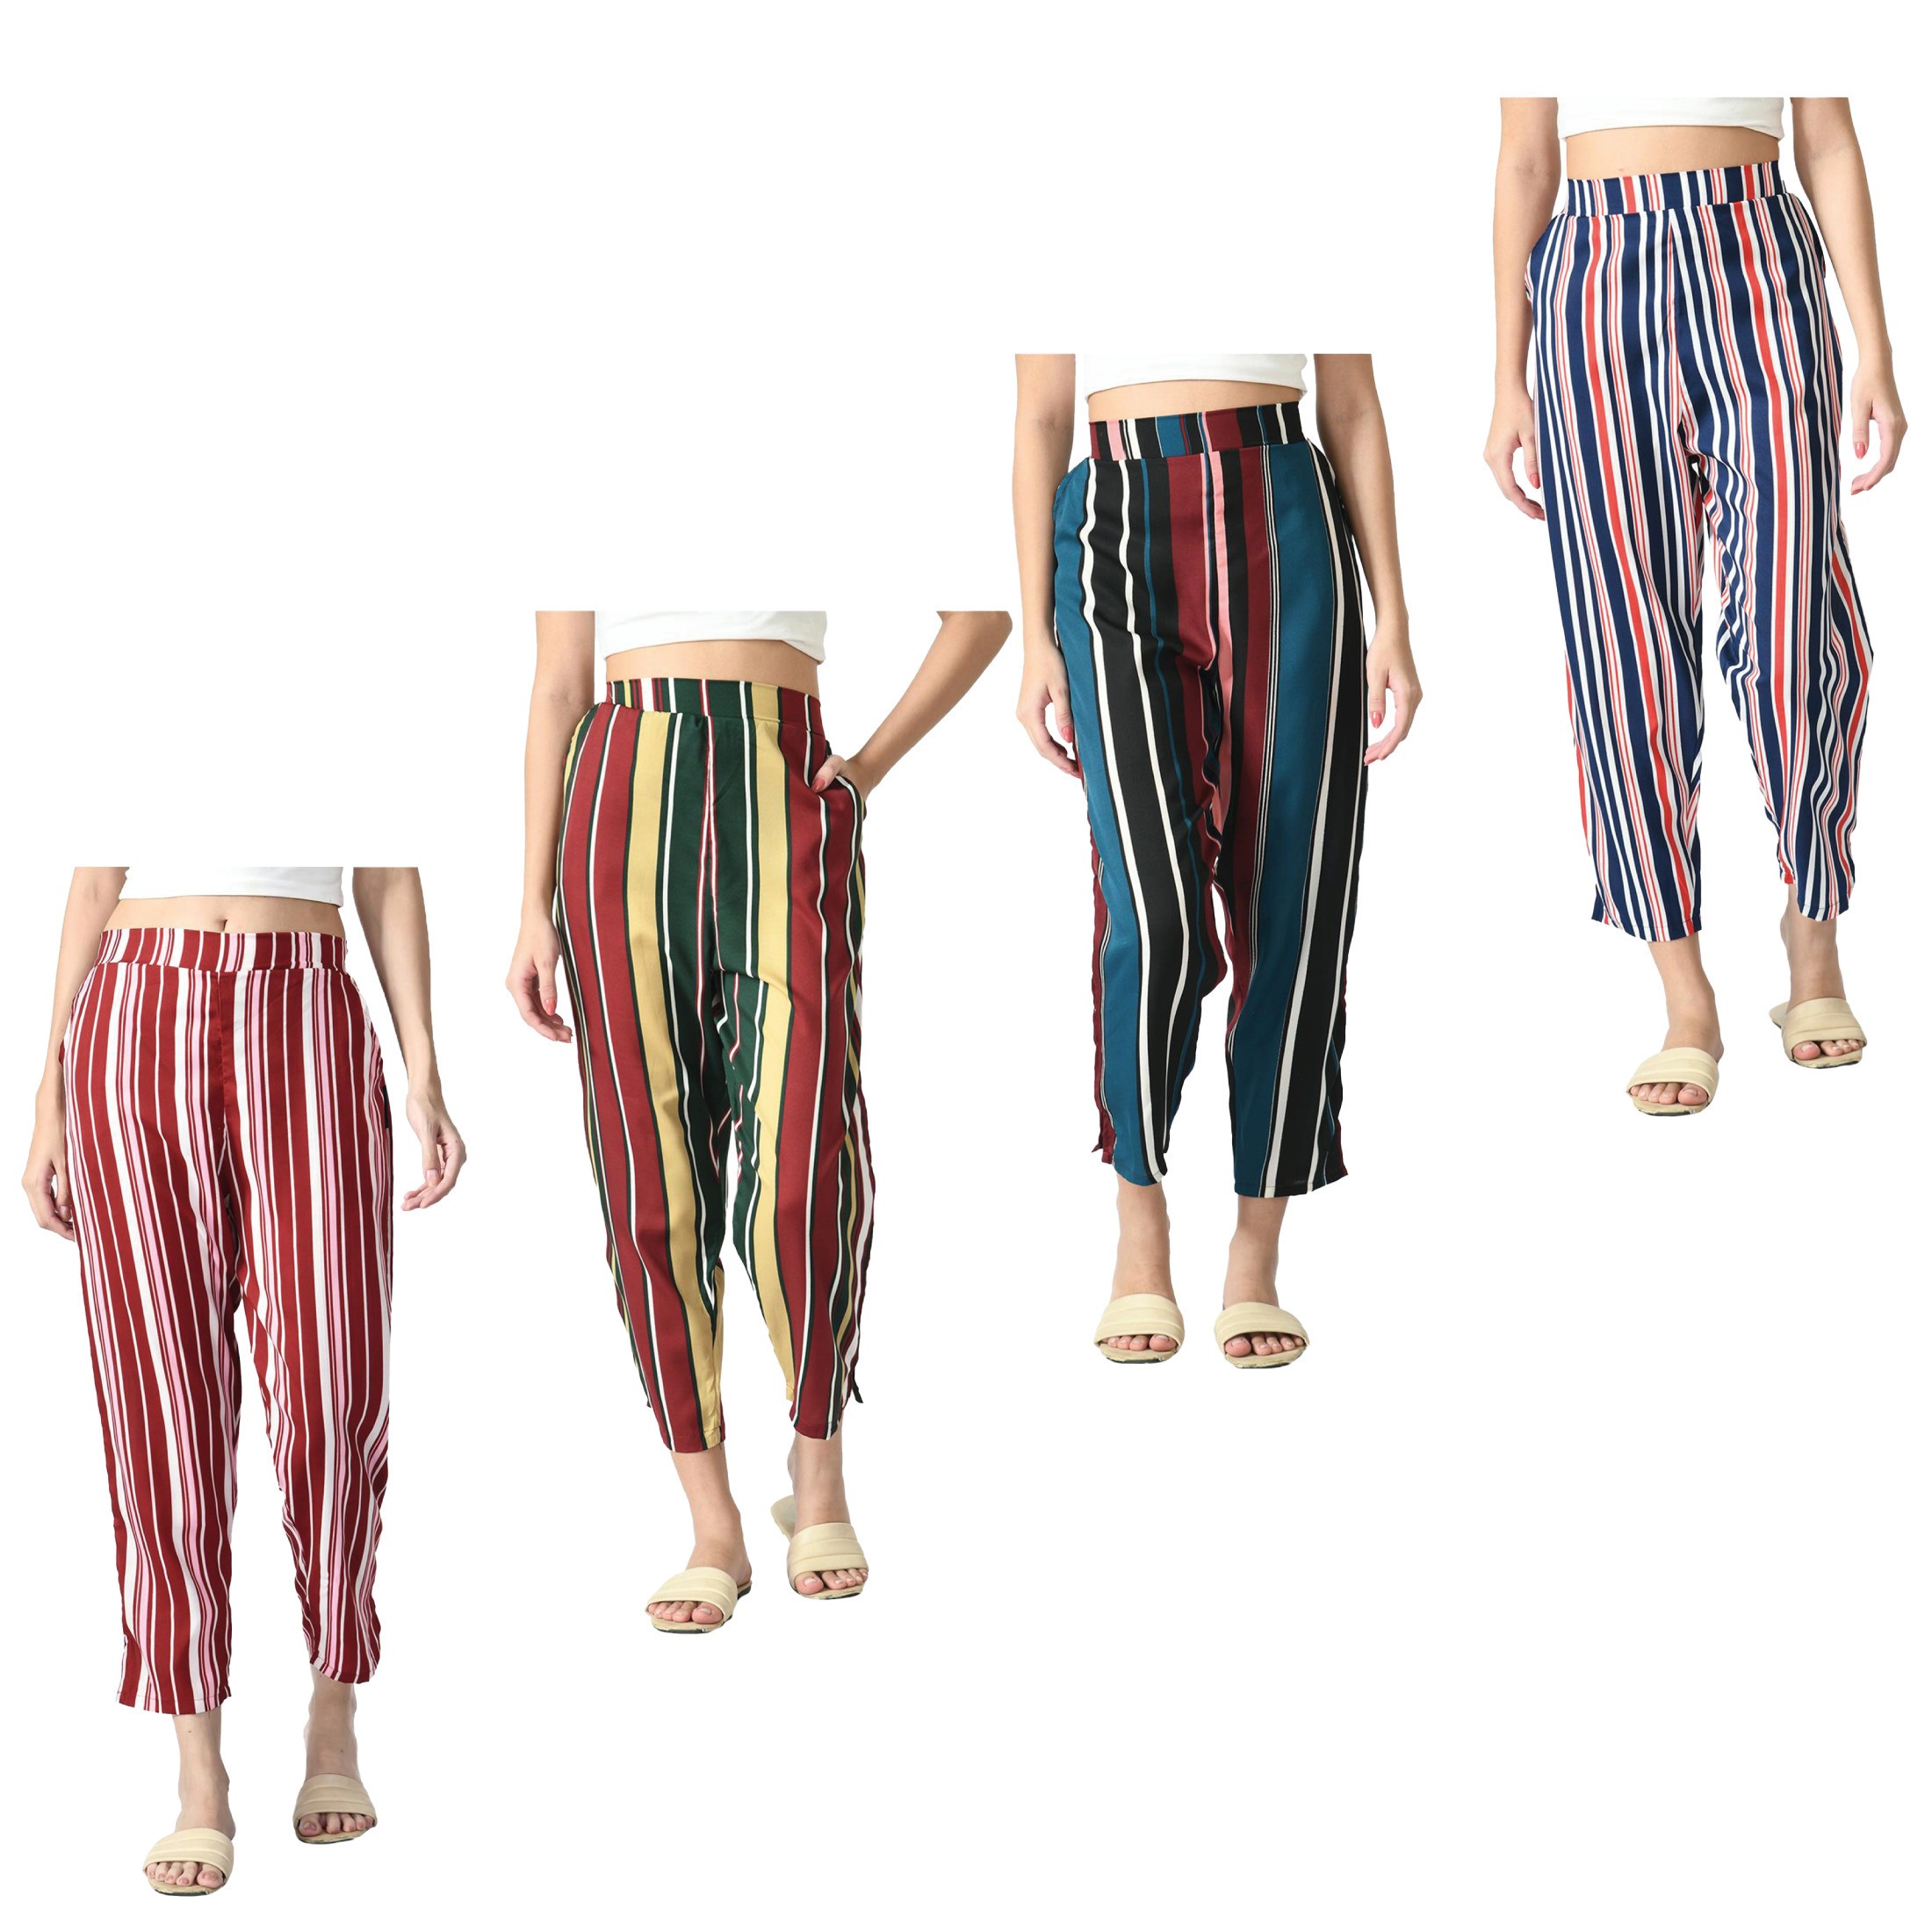 2-Pack: Ladies Summer Soft Fashionable Striped Wide Open Boho Leg Palazzo Pants - Large